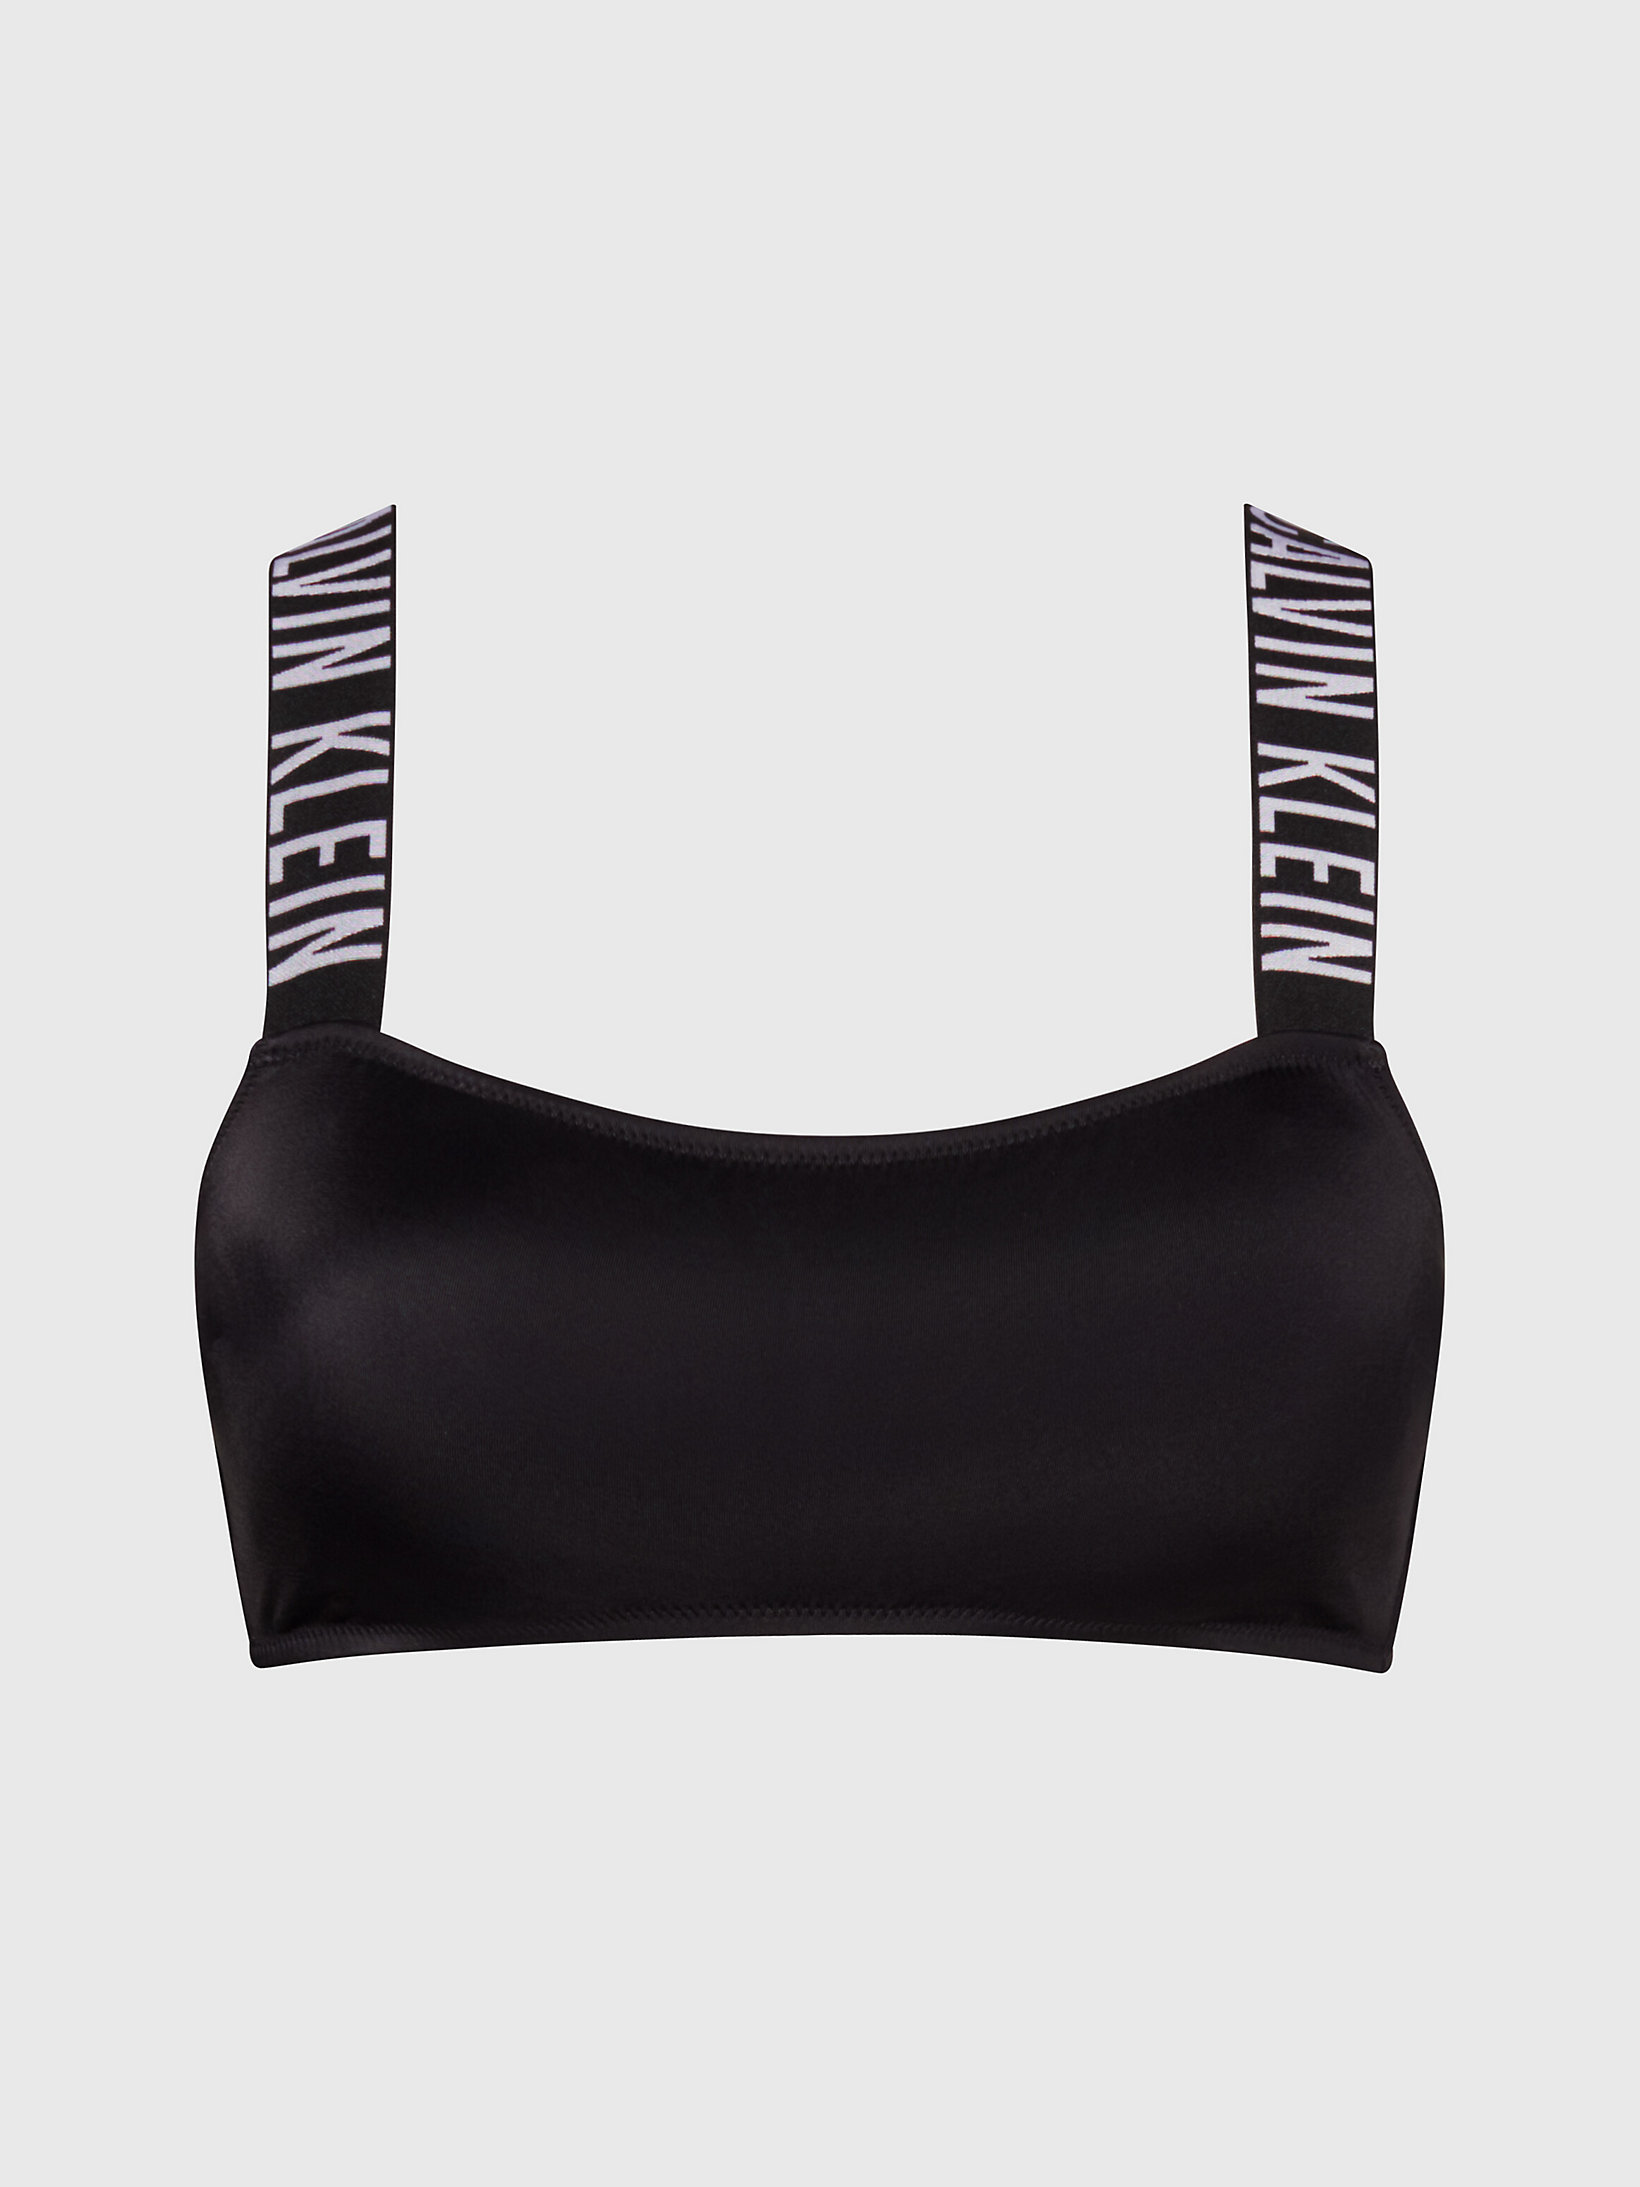 Pvh Black Bandeau Bikini Top - Intense Power undefined women Calvin Klein